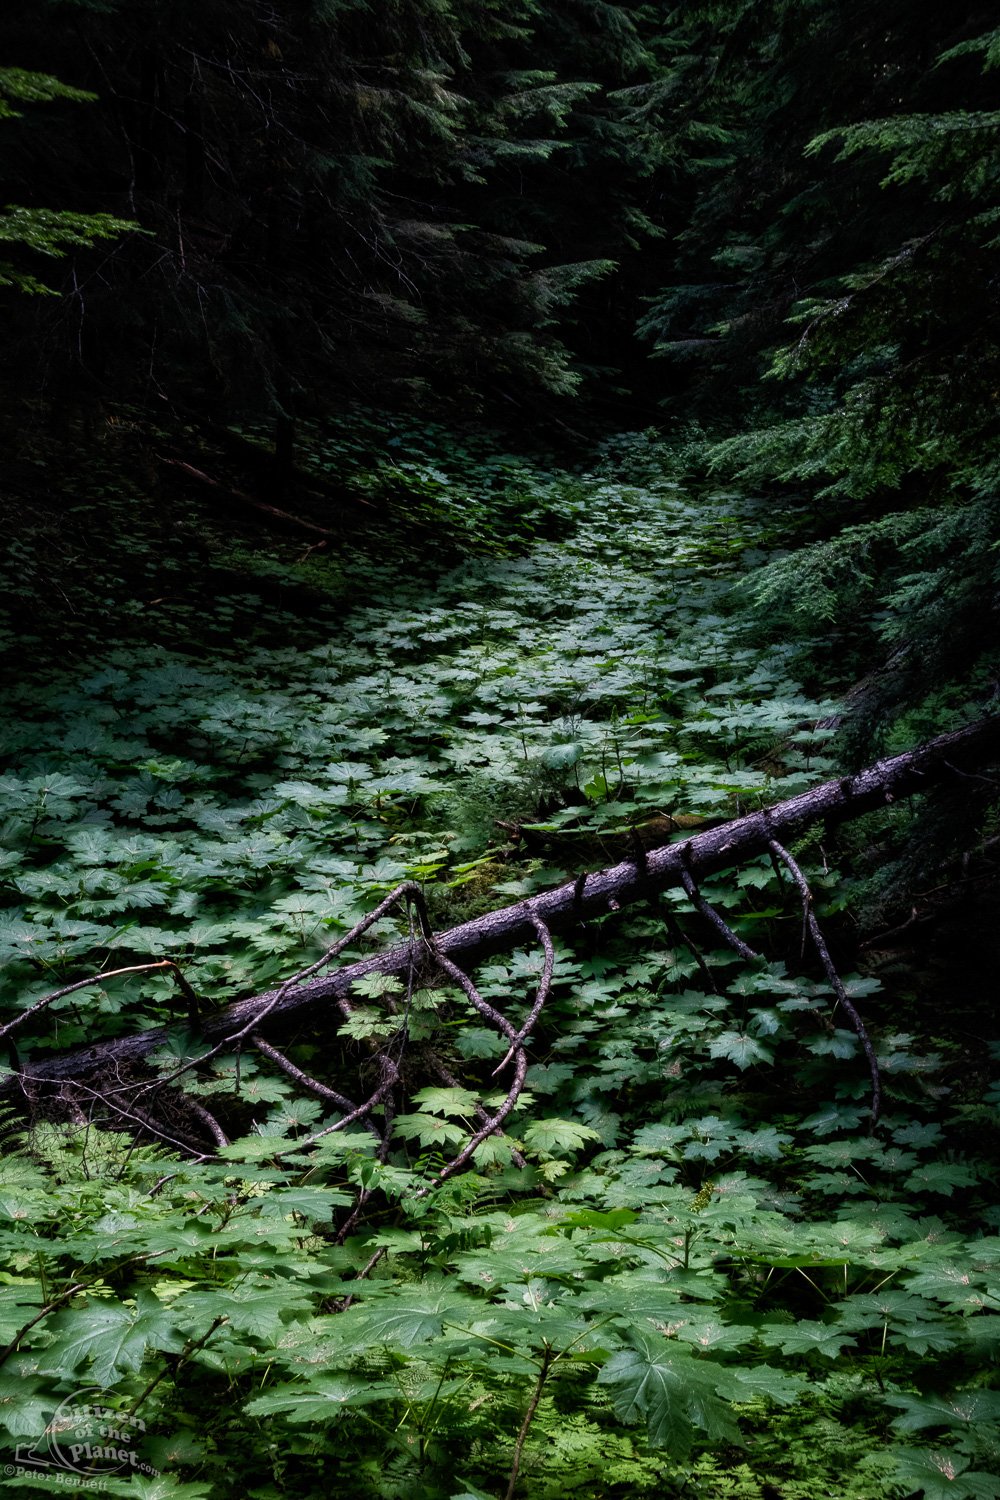 Kootenay forest, British Columbia